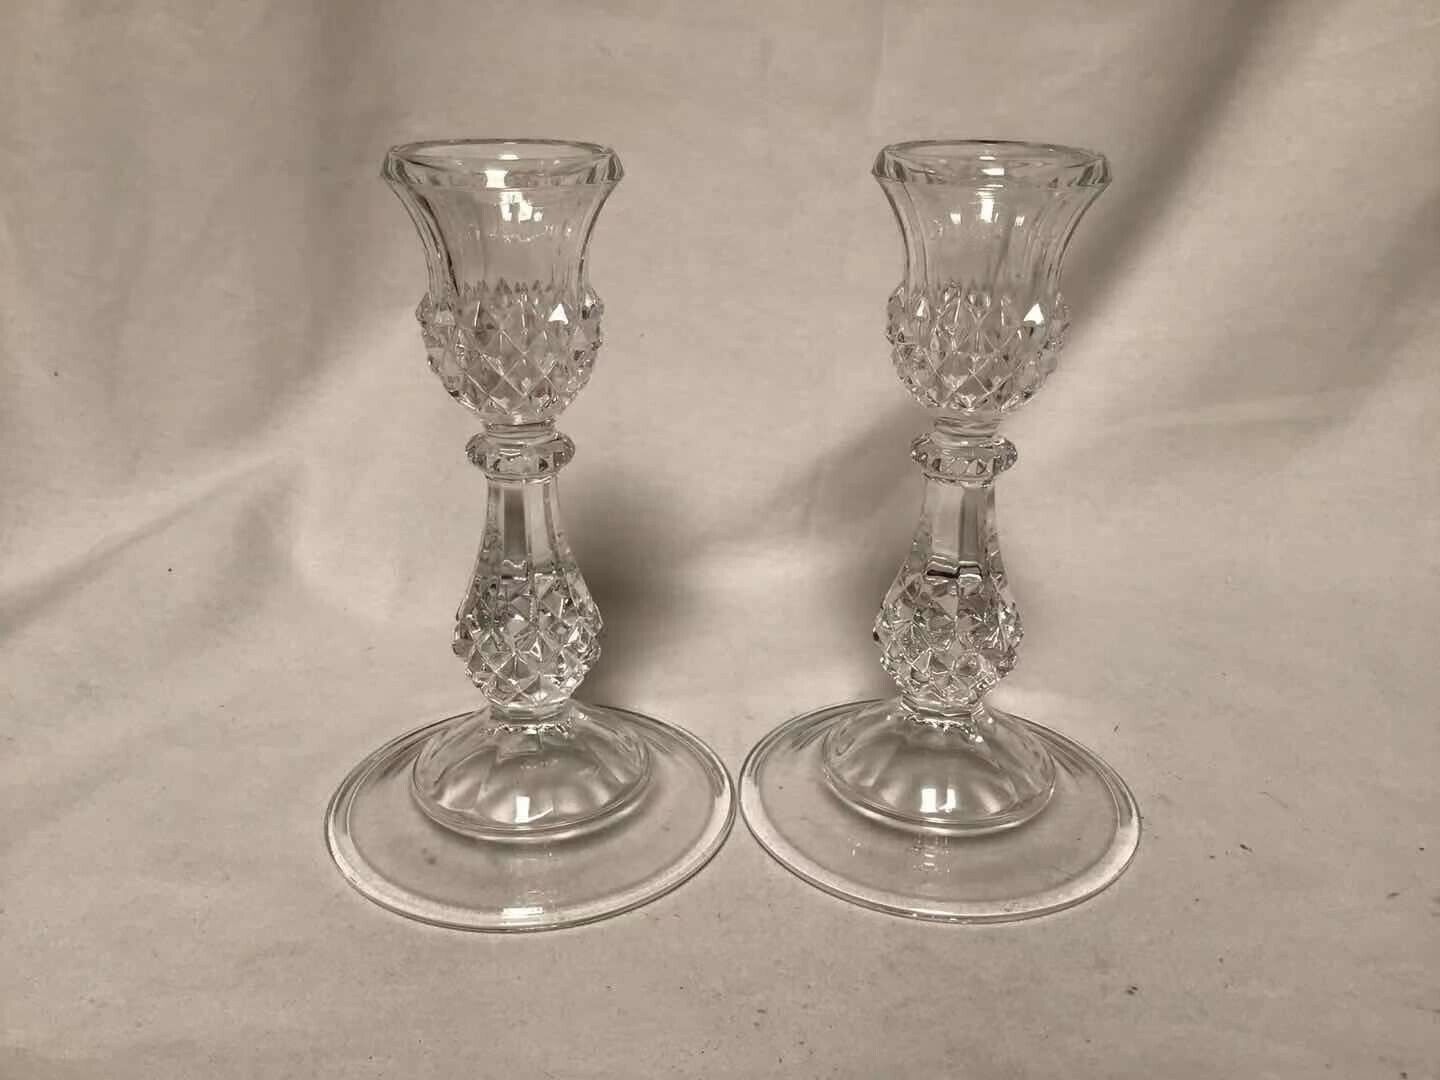 Stunning Vintage Crystal Glass Wedding Display Candle Holders Candlesticks 2pcs